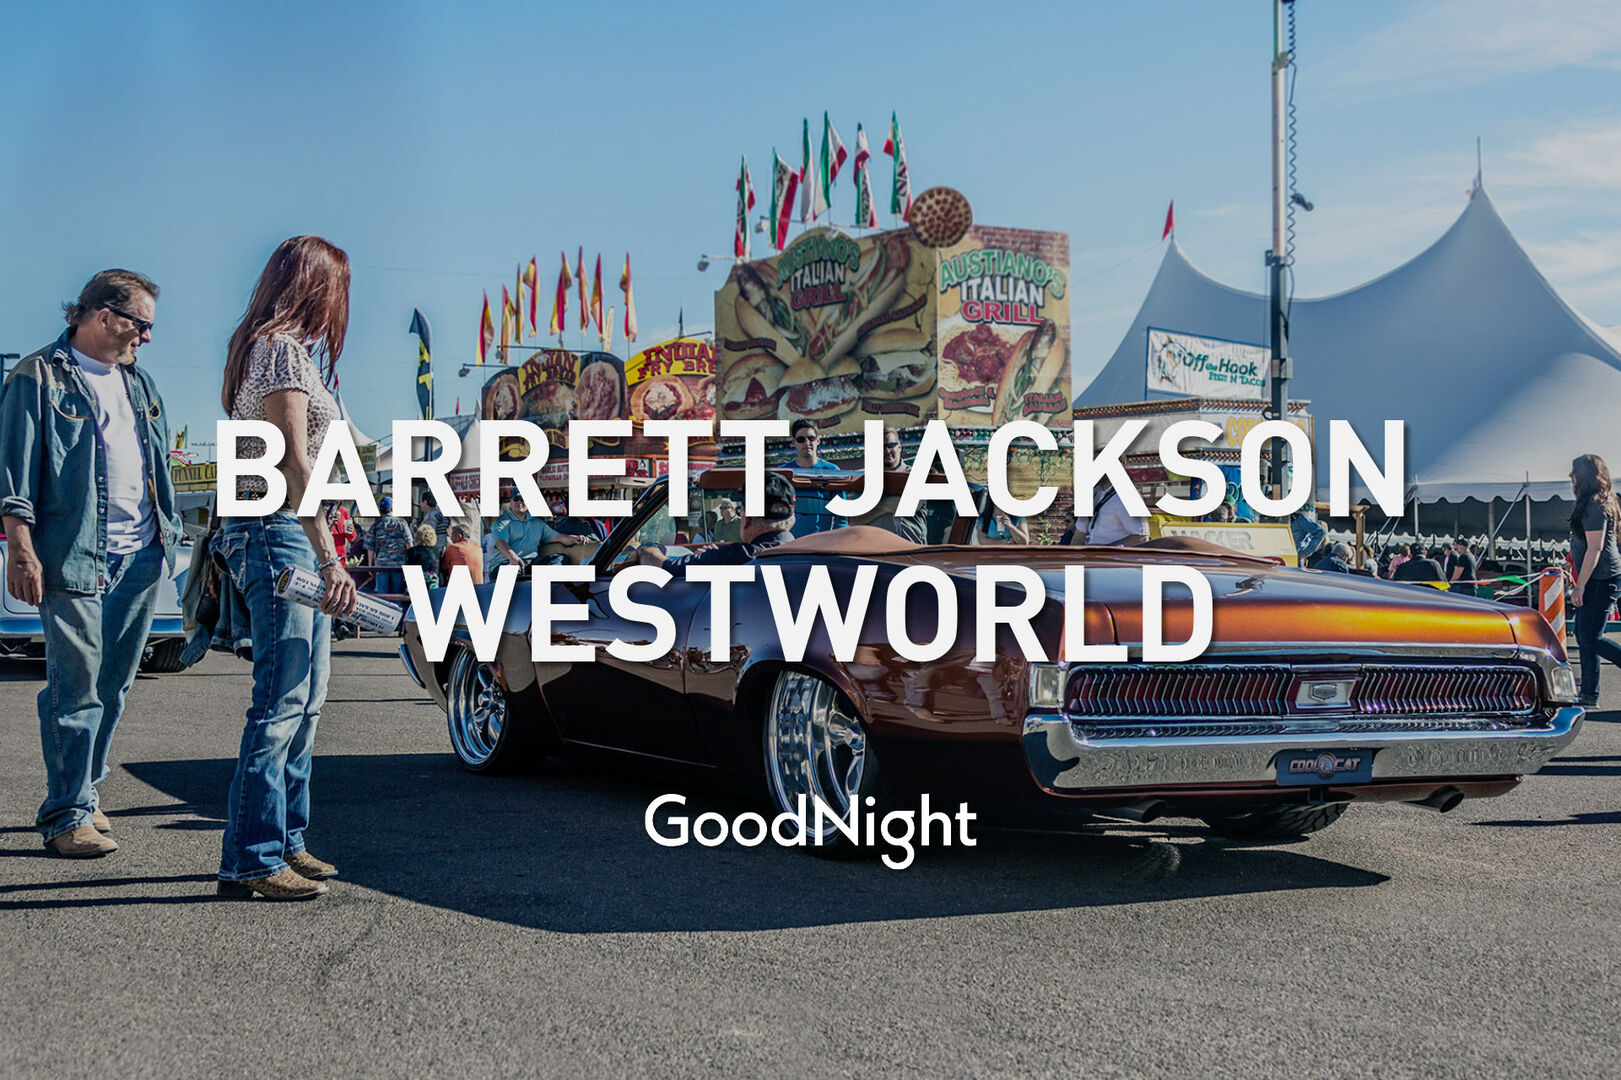 7 mins: Barrett Jackson Westworld